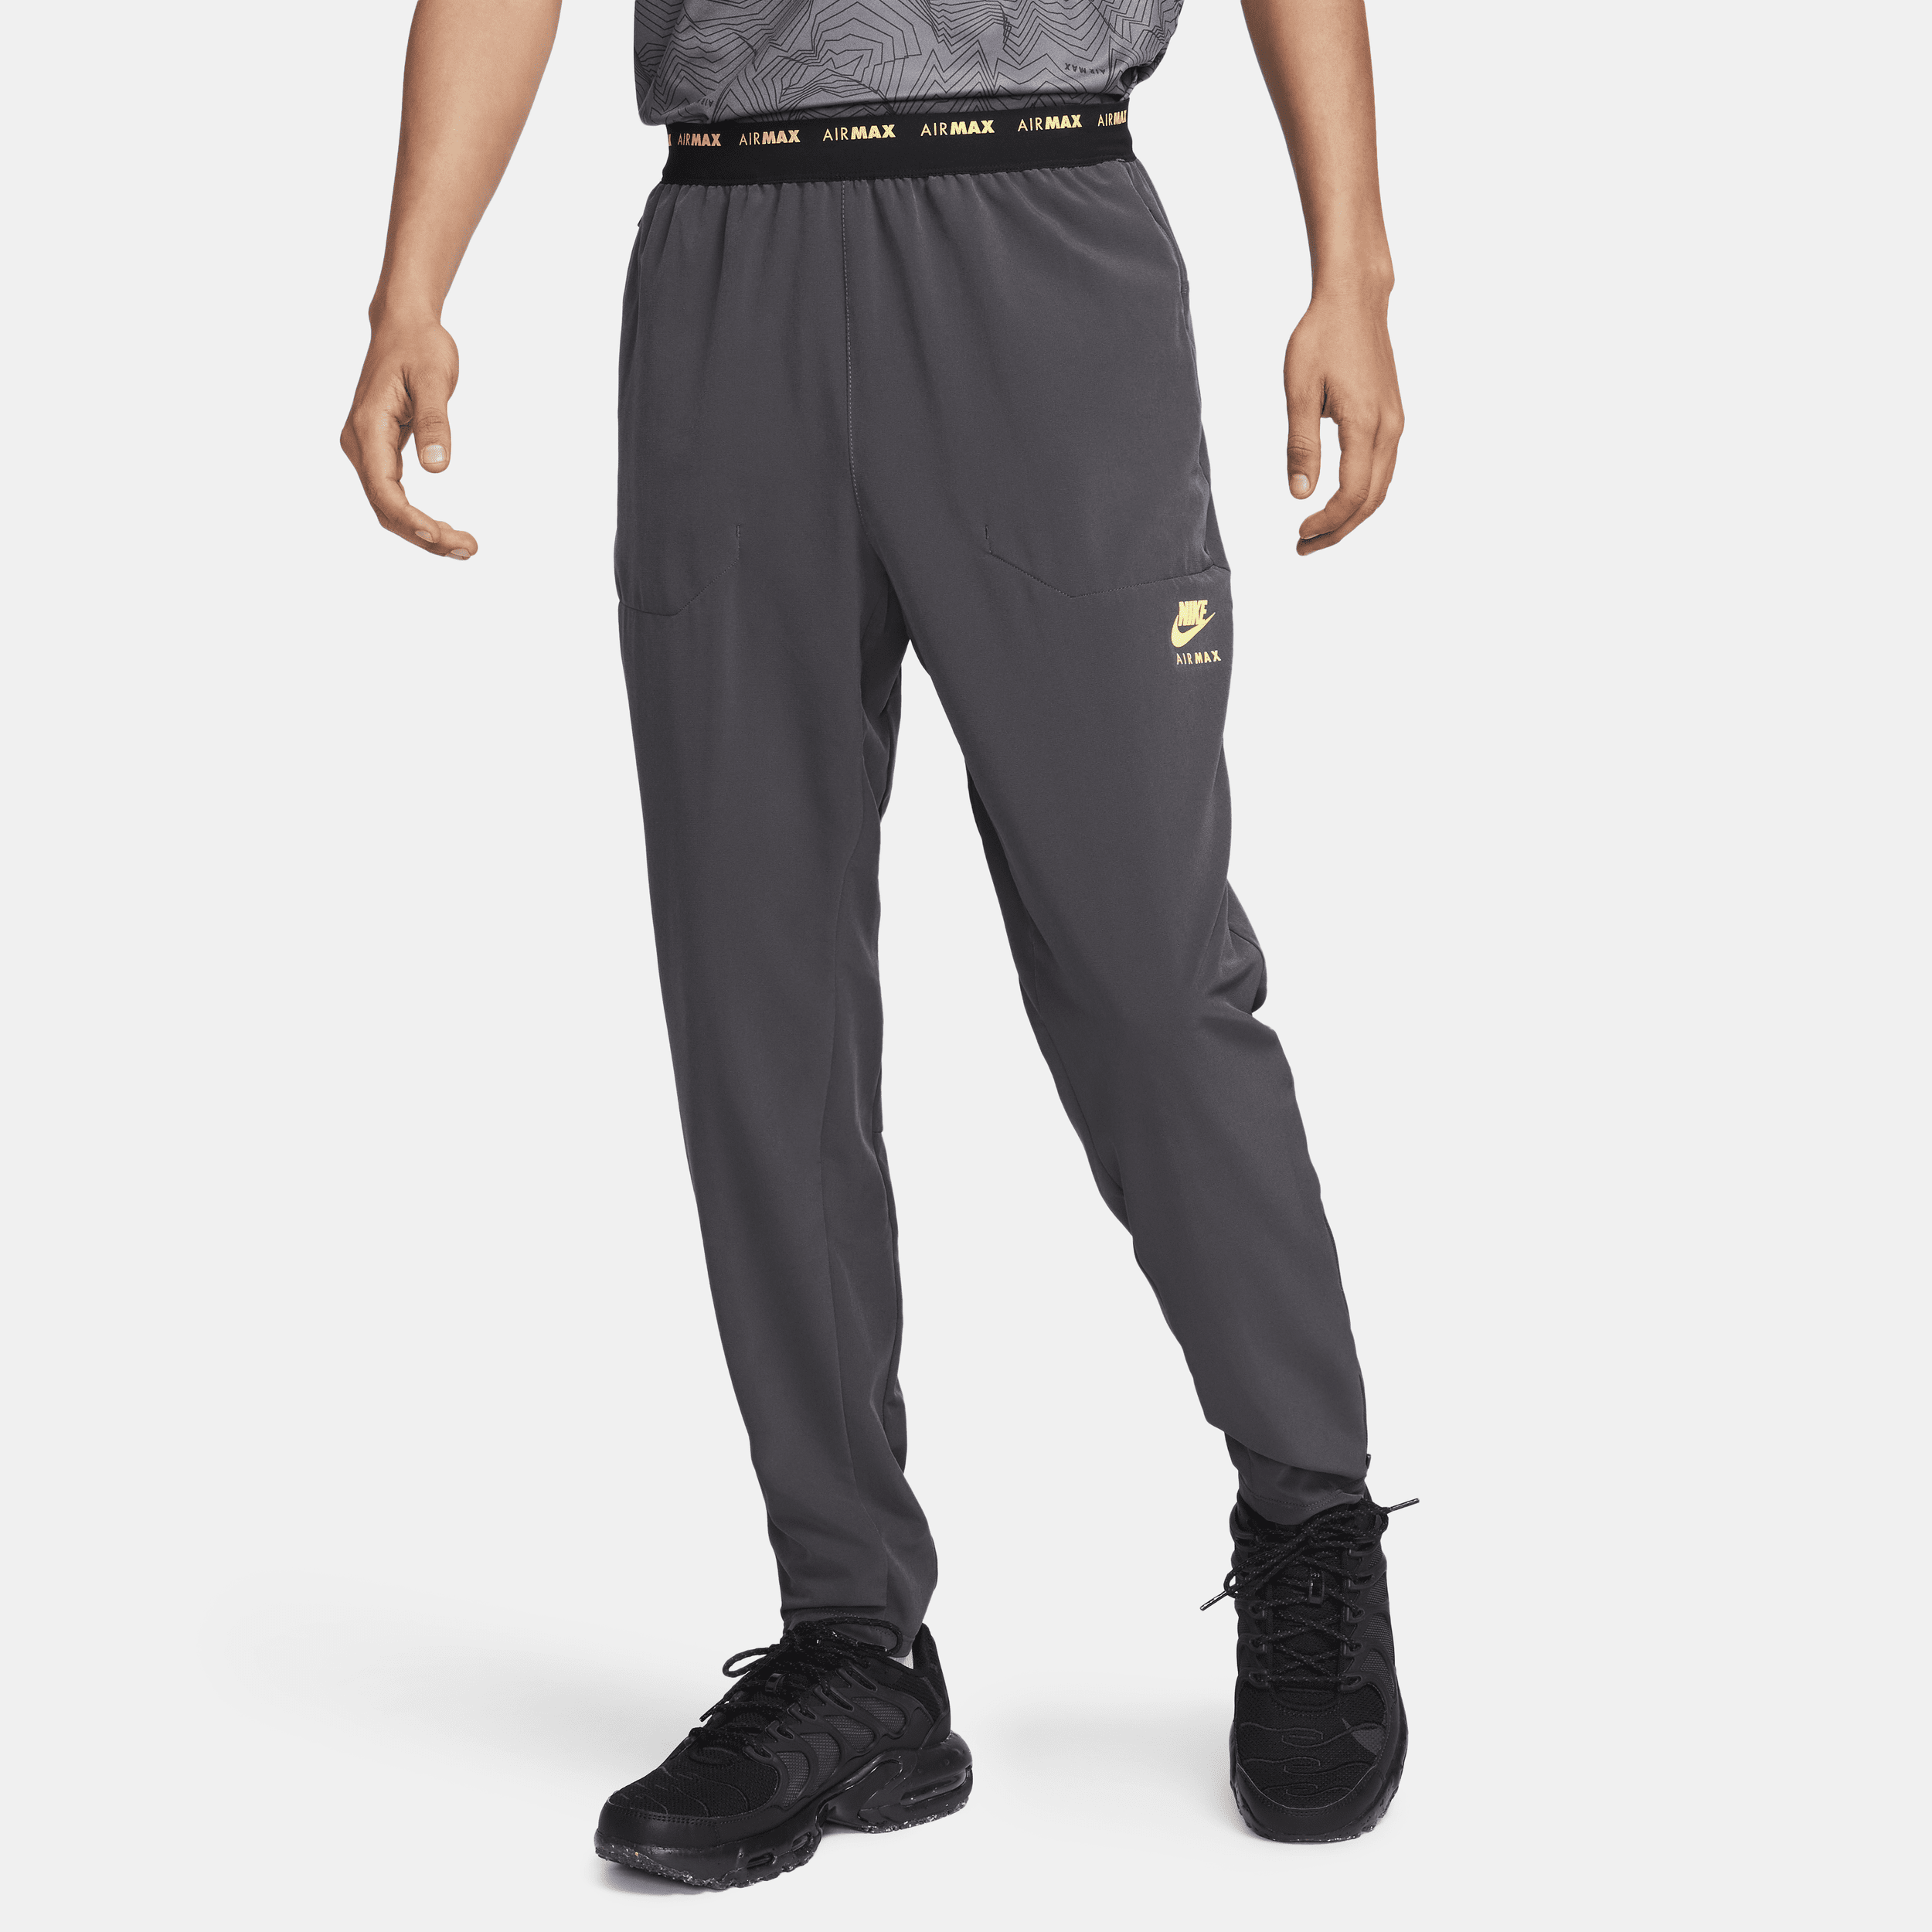 Pantaloni in tessuto Dri-FIT Nike Air Max – Uomo - Grigio